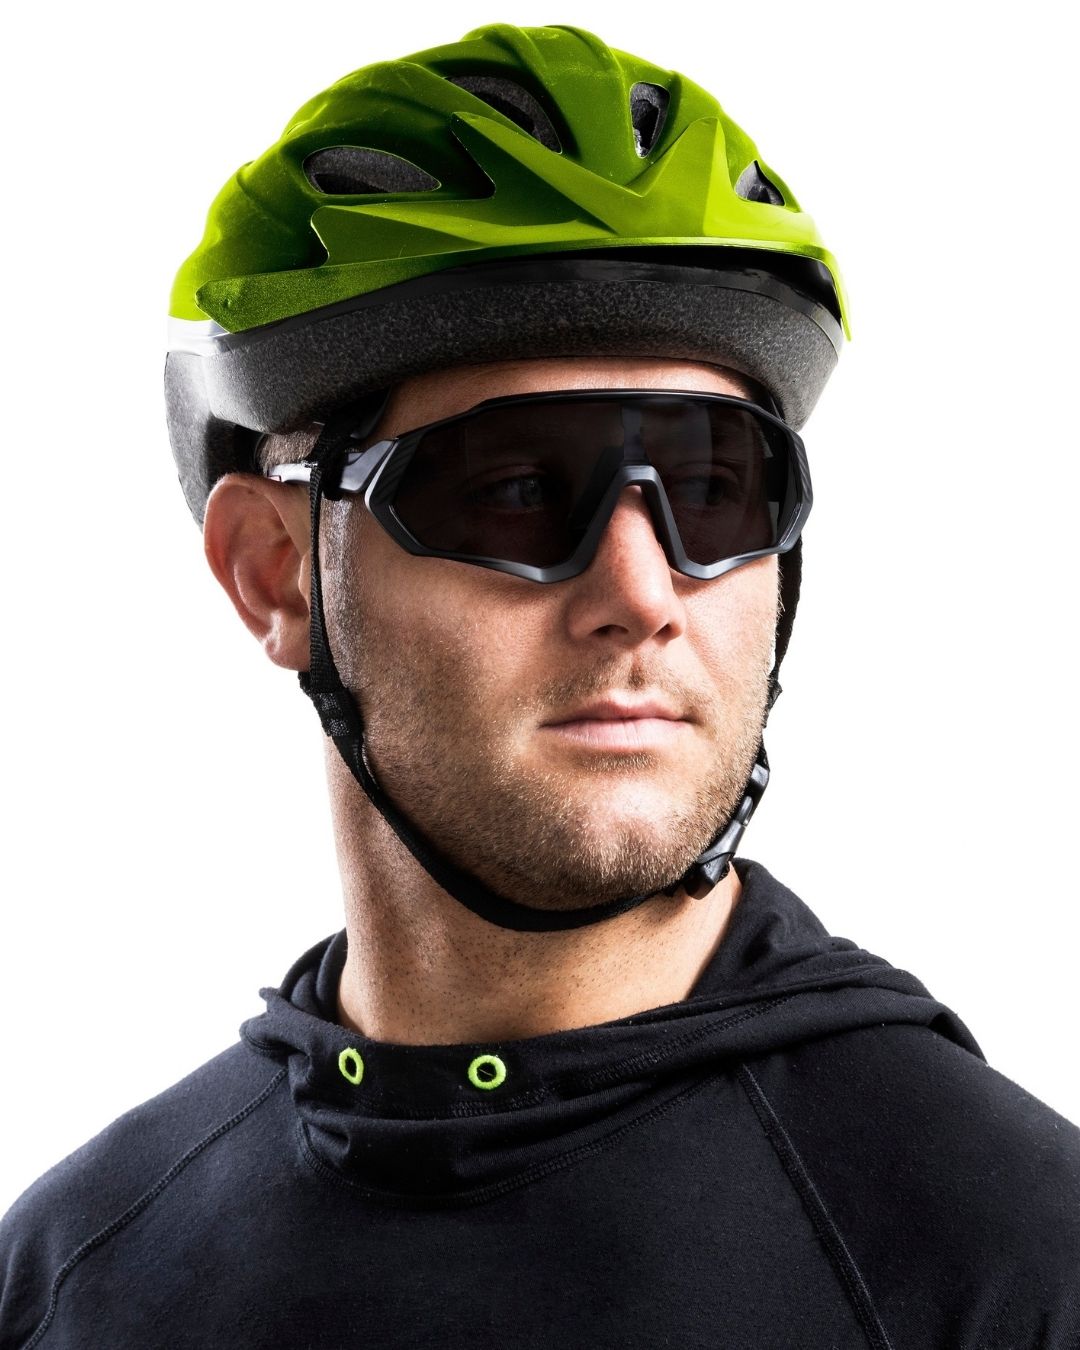 Rider with SAOLAR photochromic sunglasses